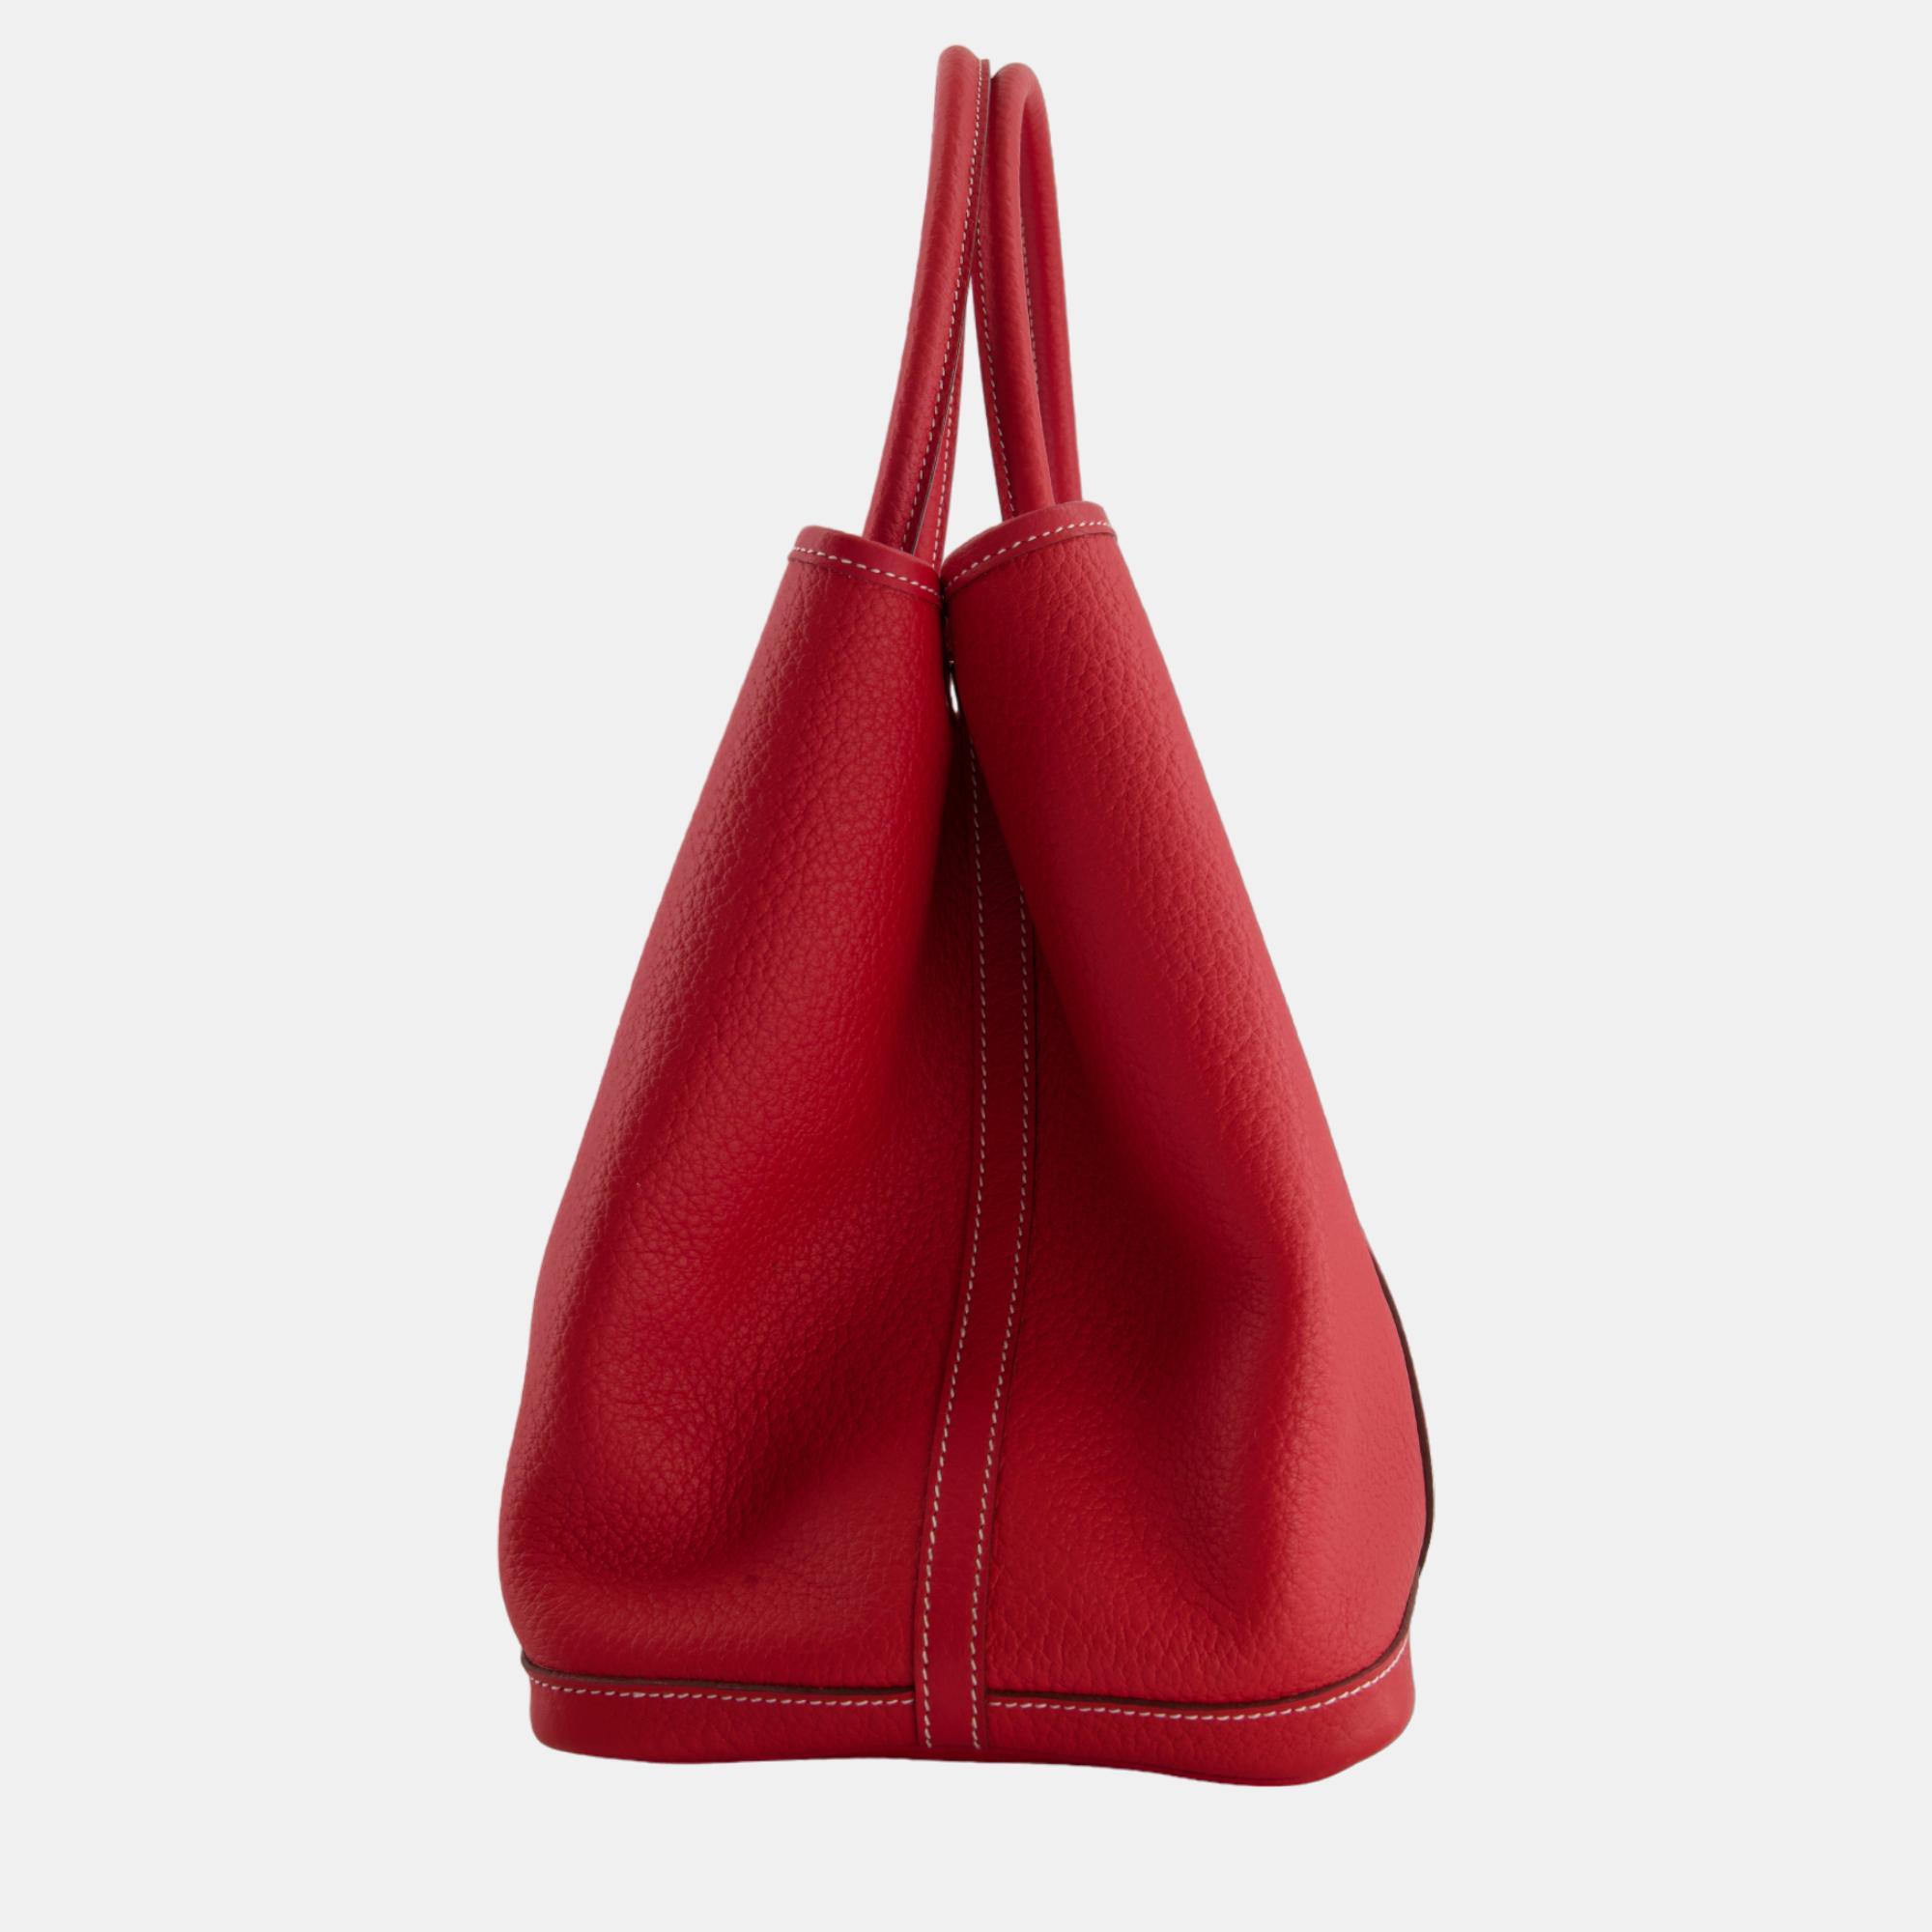 Hermes Garden Party Bag 36cm In Rouge Tomato Negonda Leather With Palladium Hardware